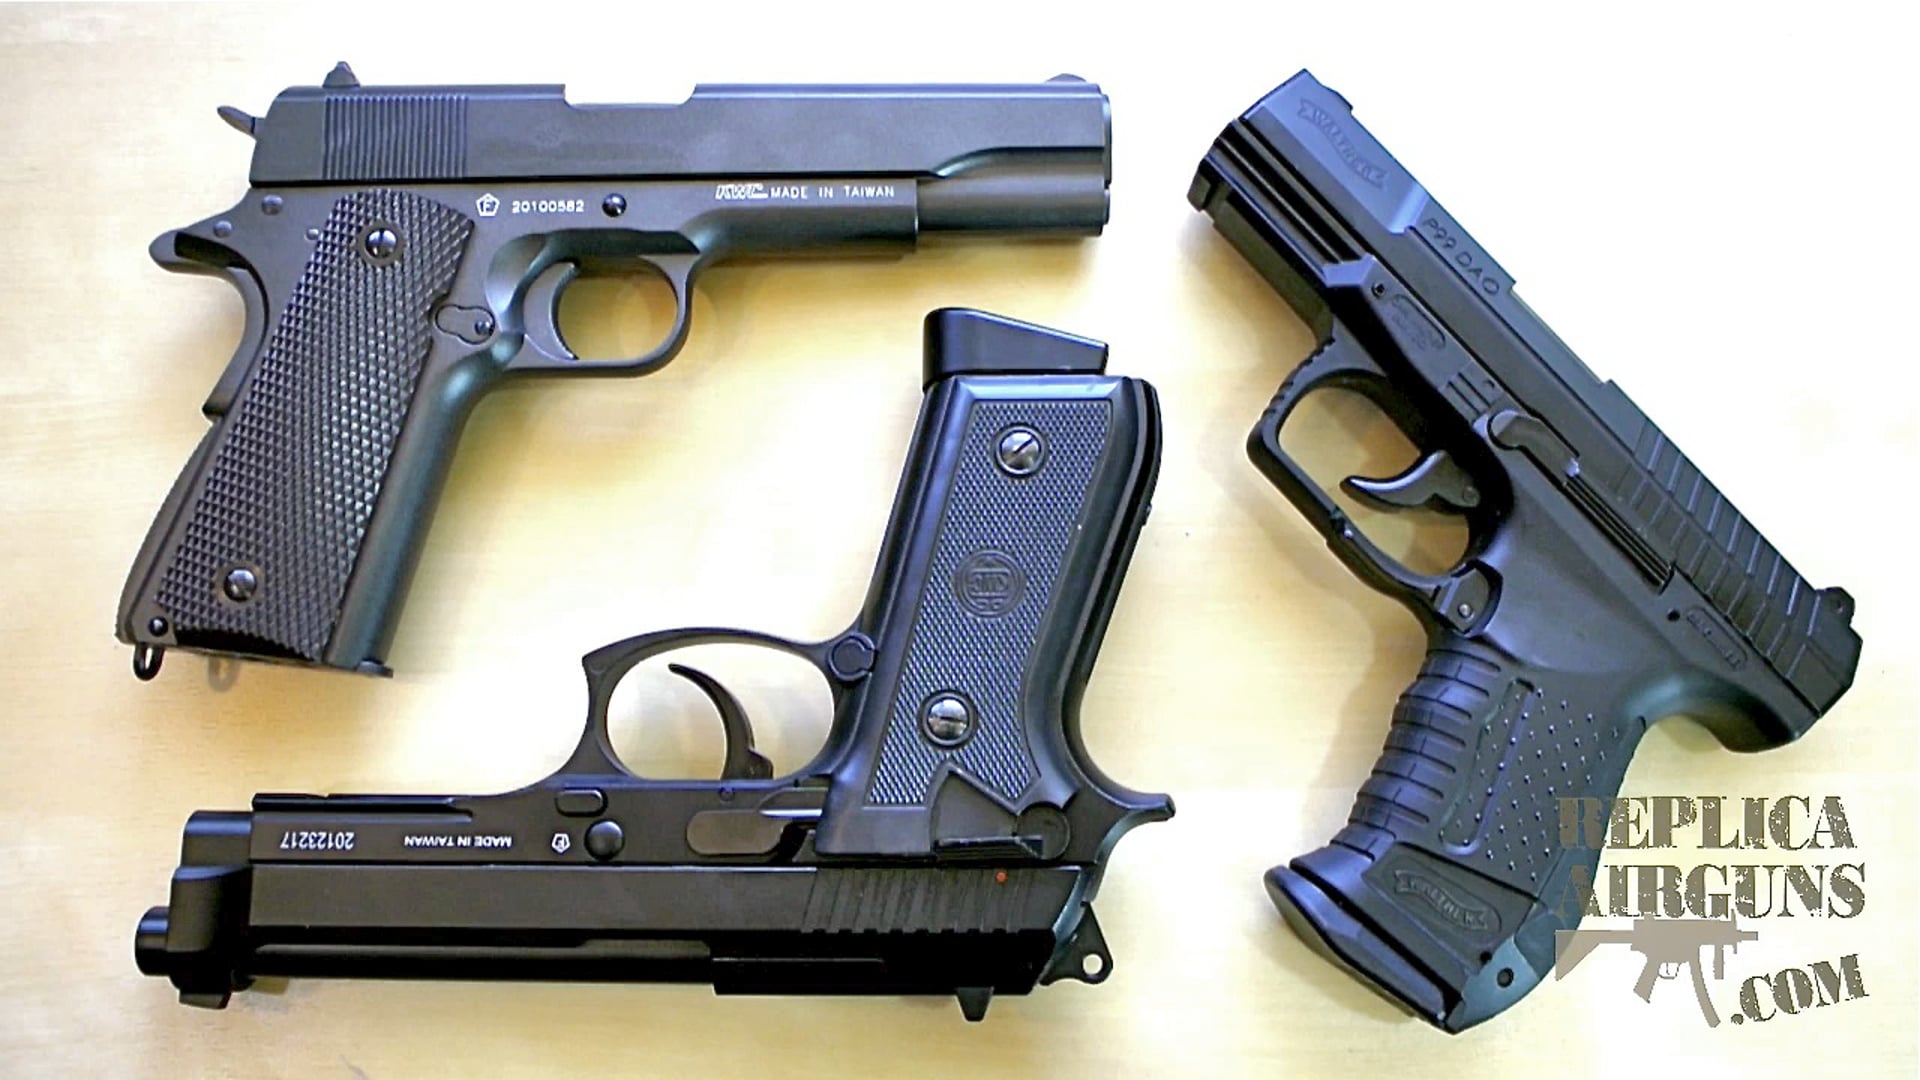 KWC M1911 - M92 (PT99) - Umarex Walther P99 Airsoft Pistol Update Video